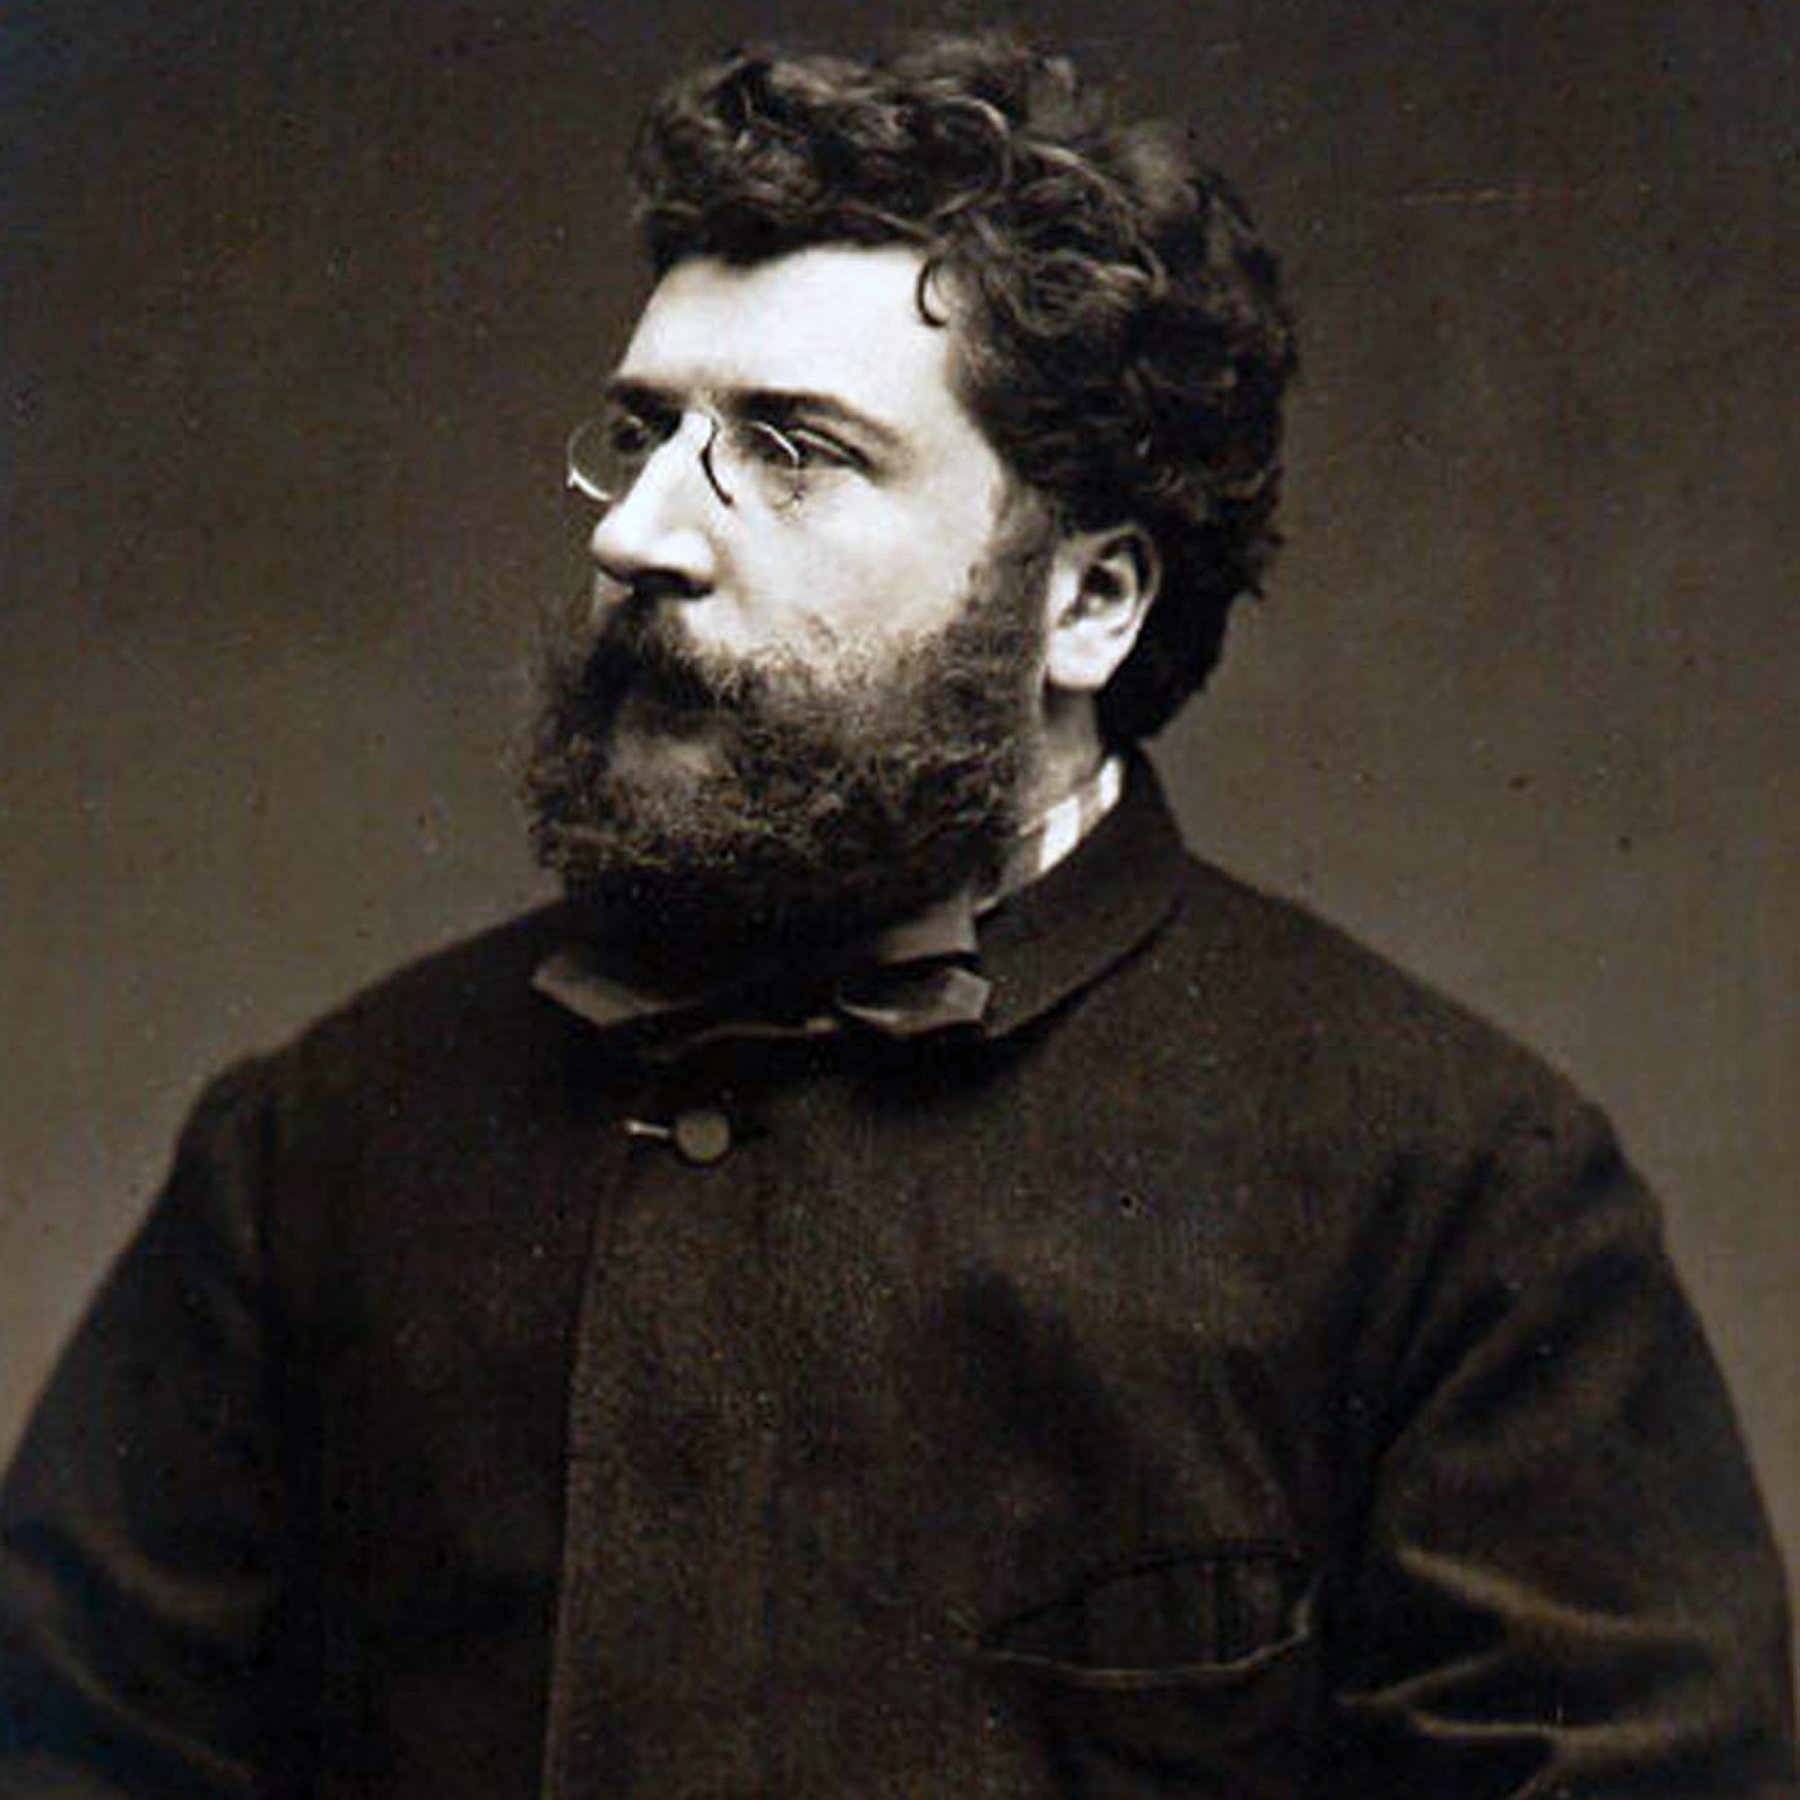 Georges Bizet, Composer “Habanera” and “En vain pour eviter” 